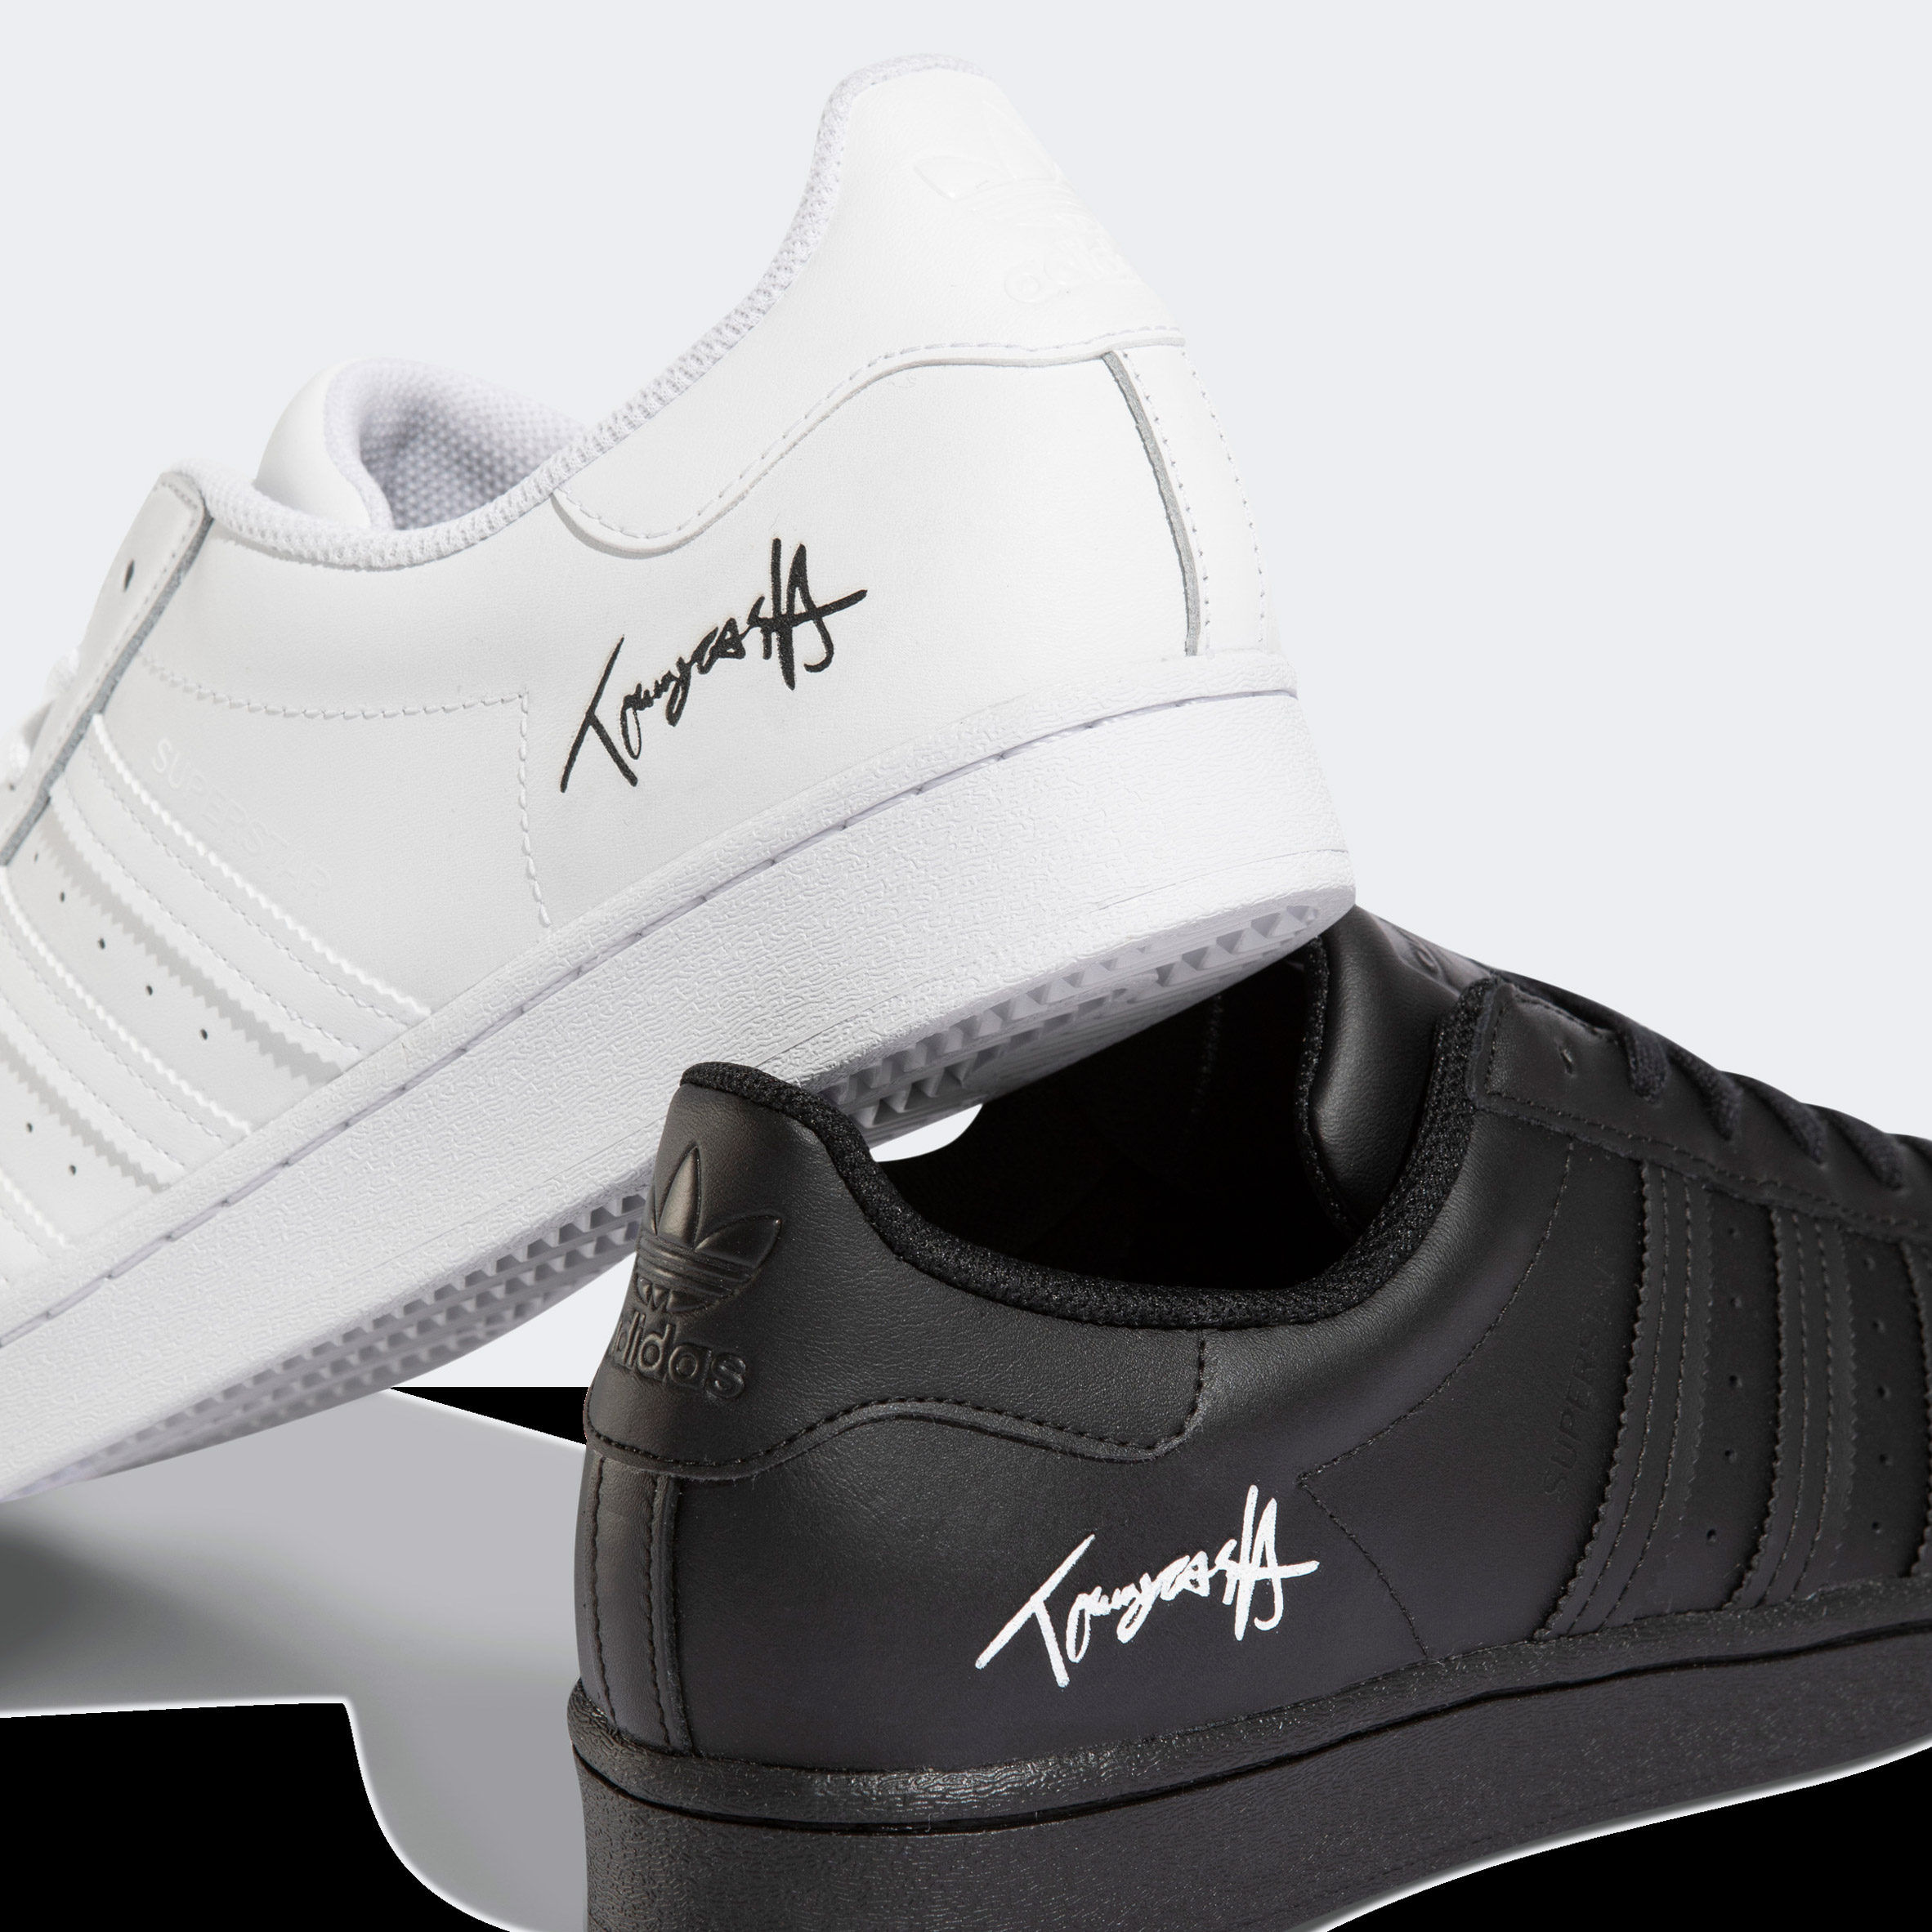 Bridge pier Editor turn around Adidas designs "longest shoe in the world" for rapper Tommy Cash